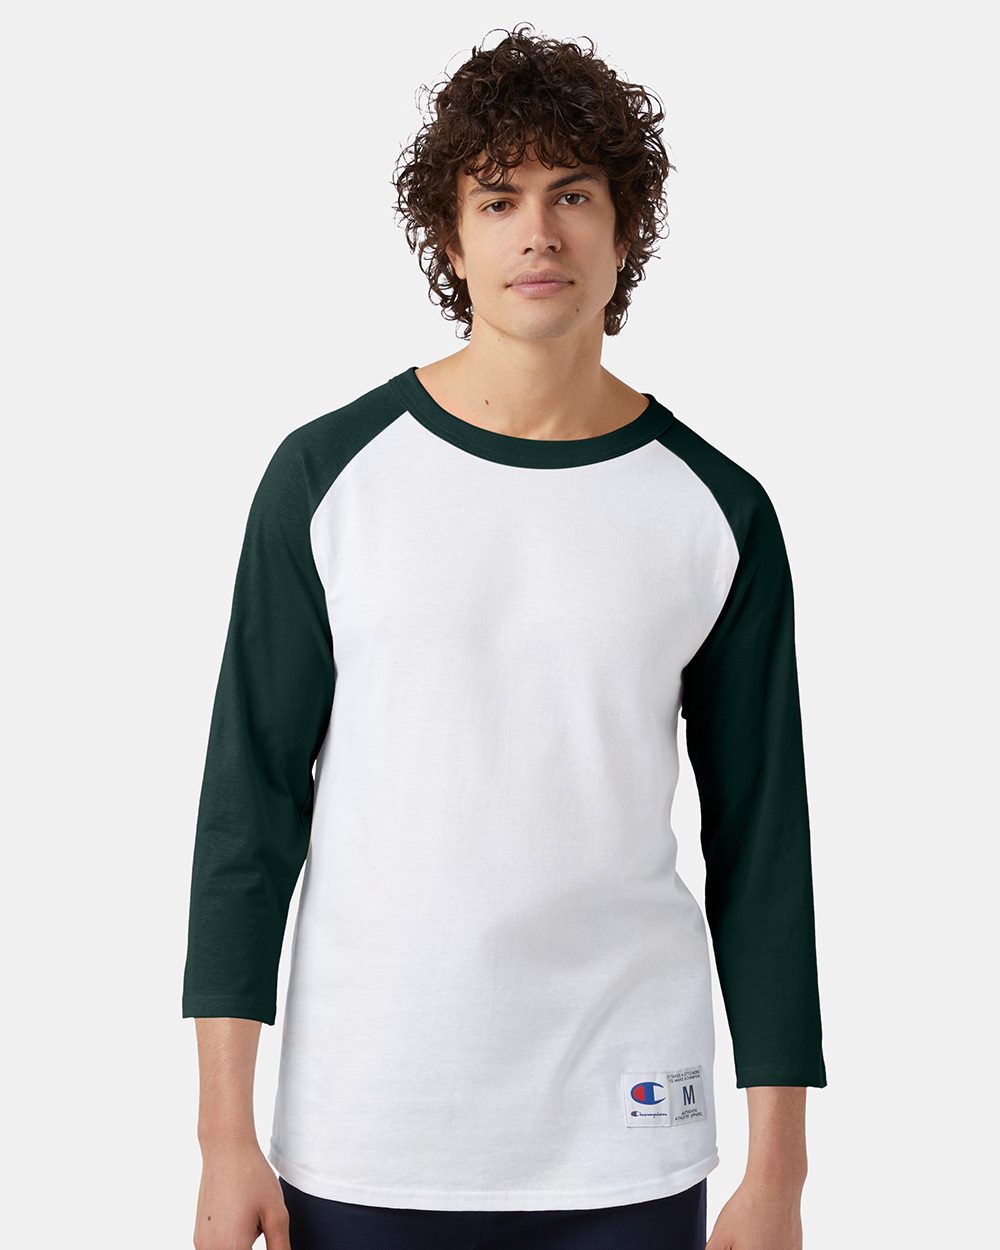 raglan sleeve baseball shirt